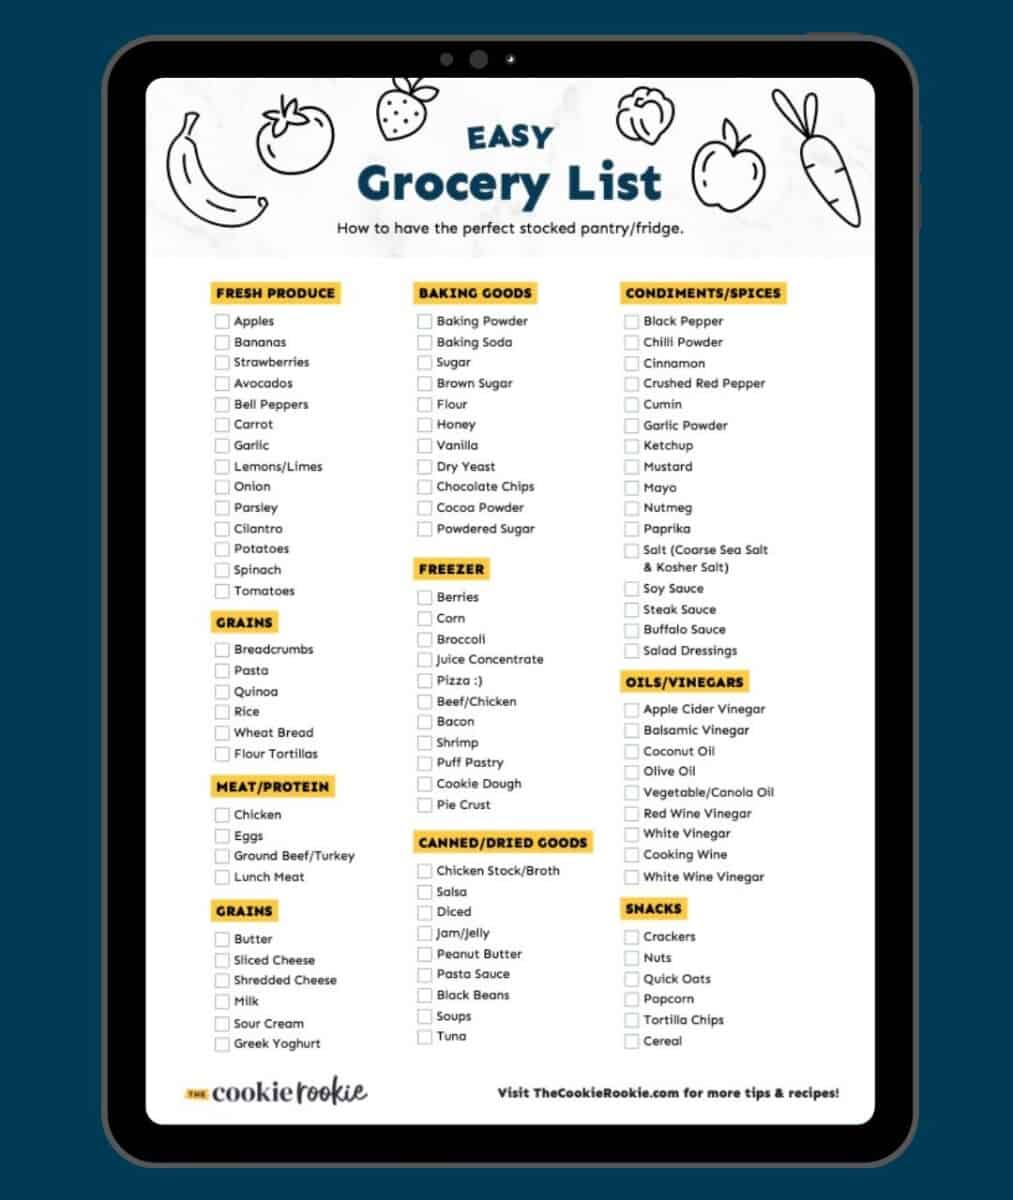 Basic grocery list